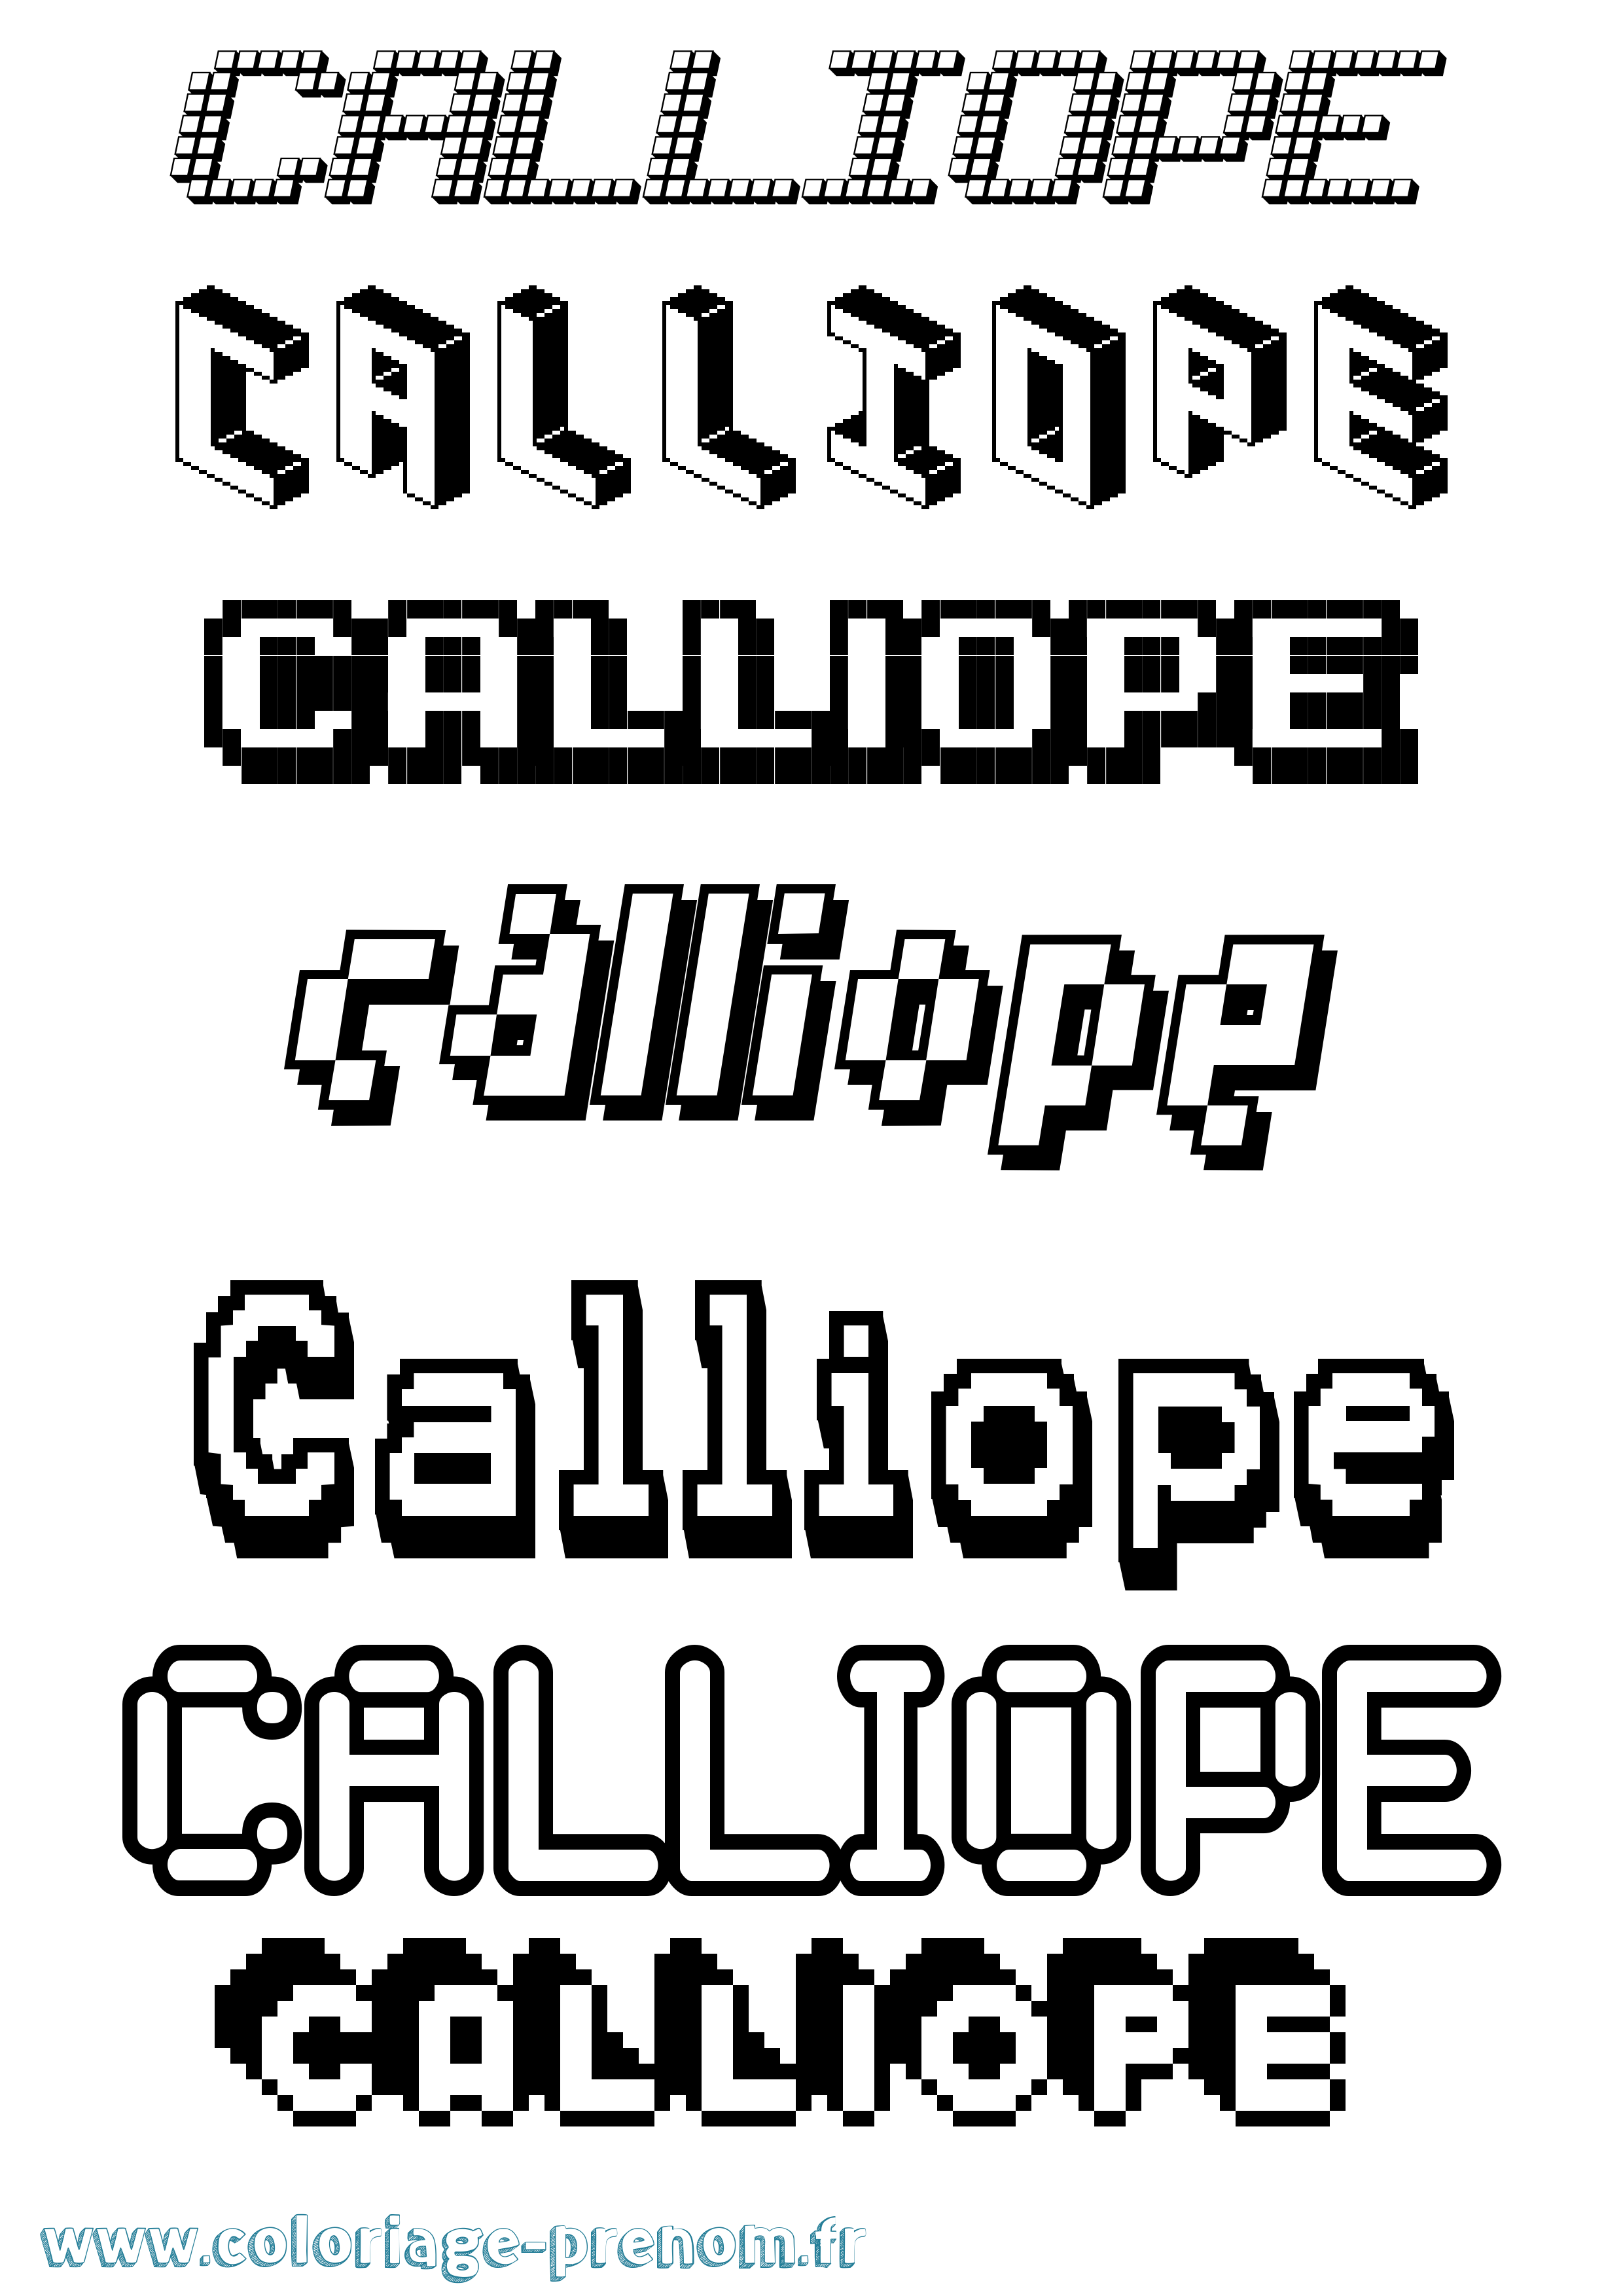 Coloriage prénom Calliope Pixel